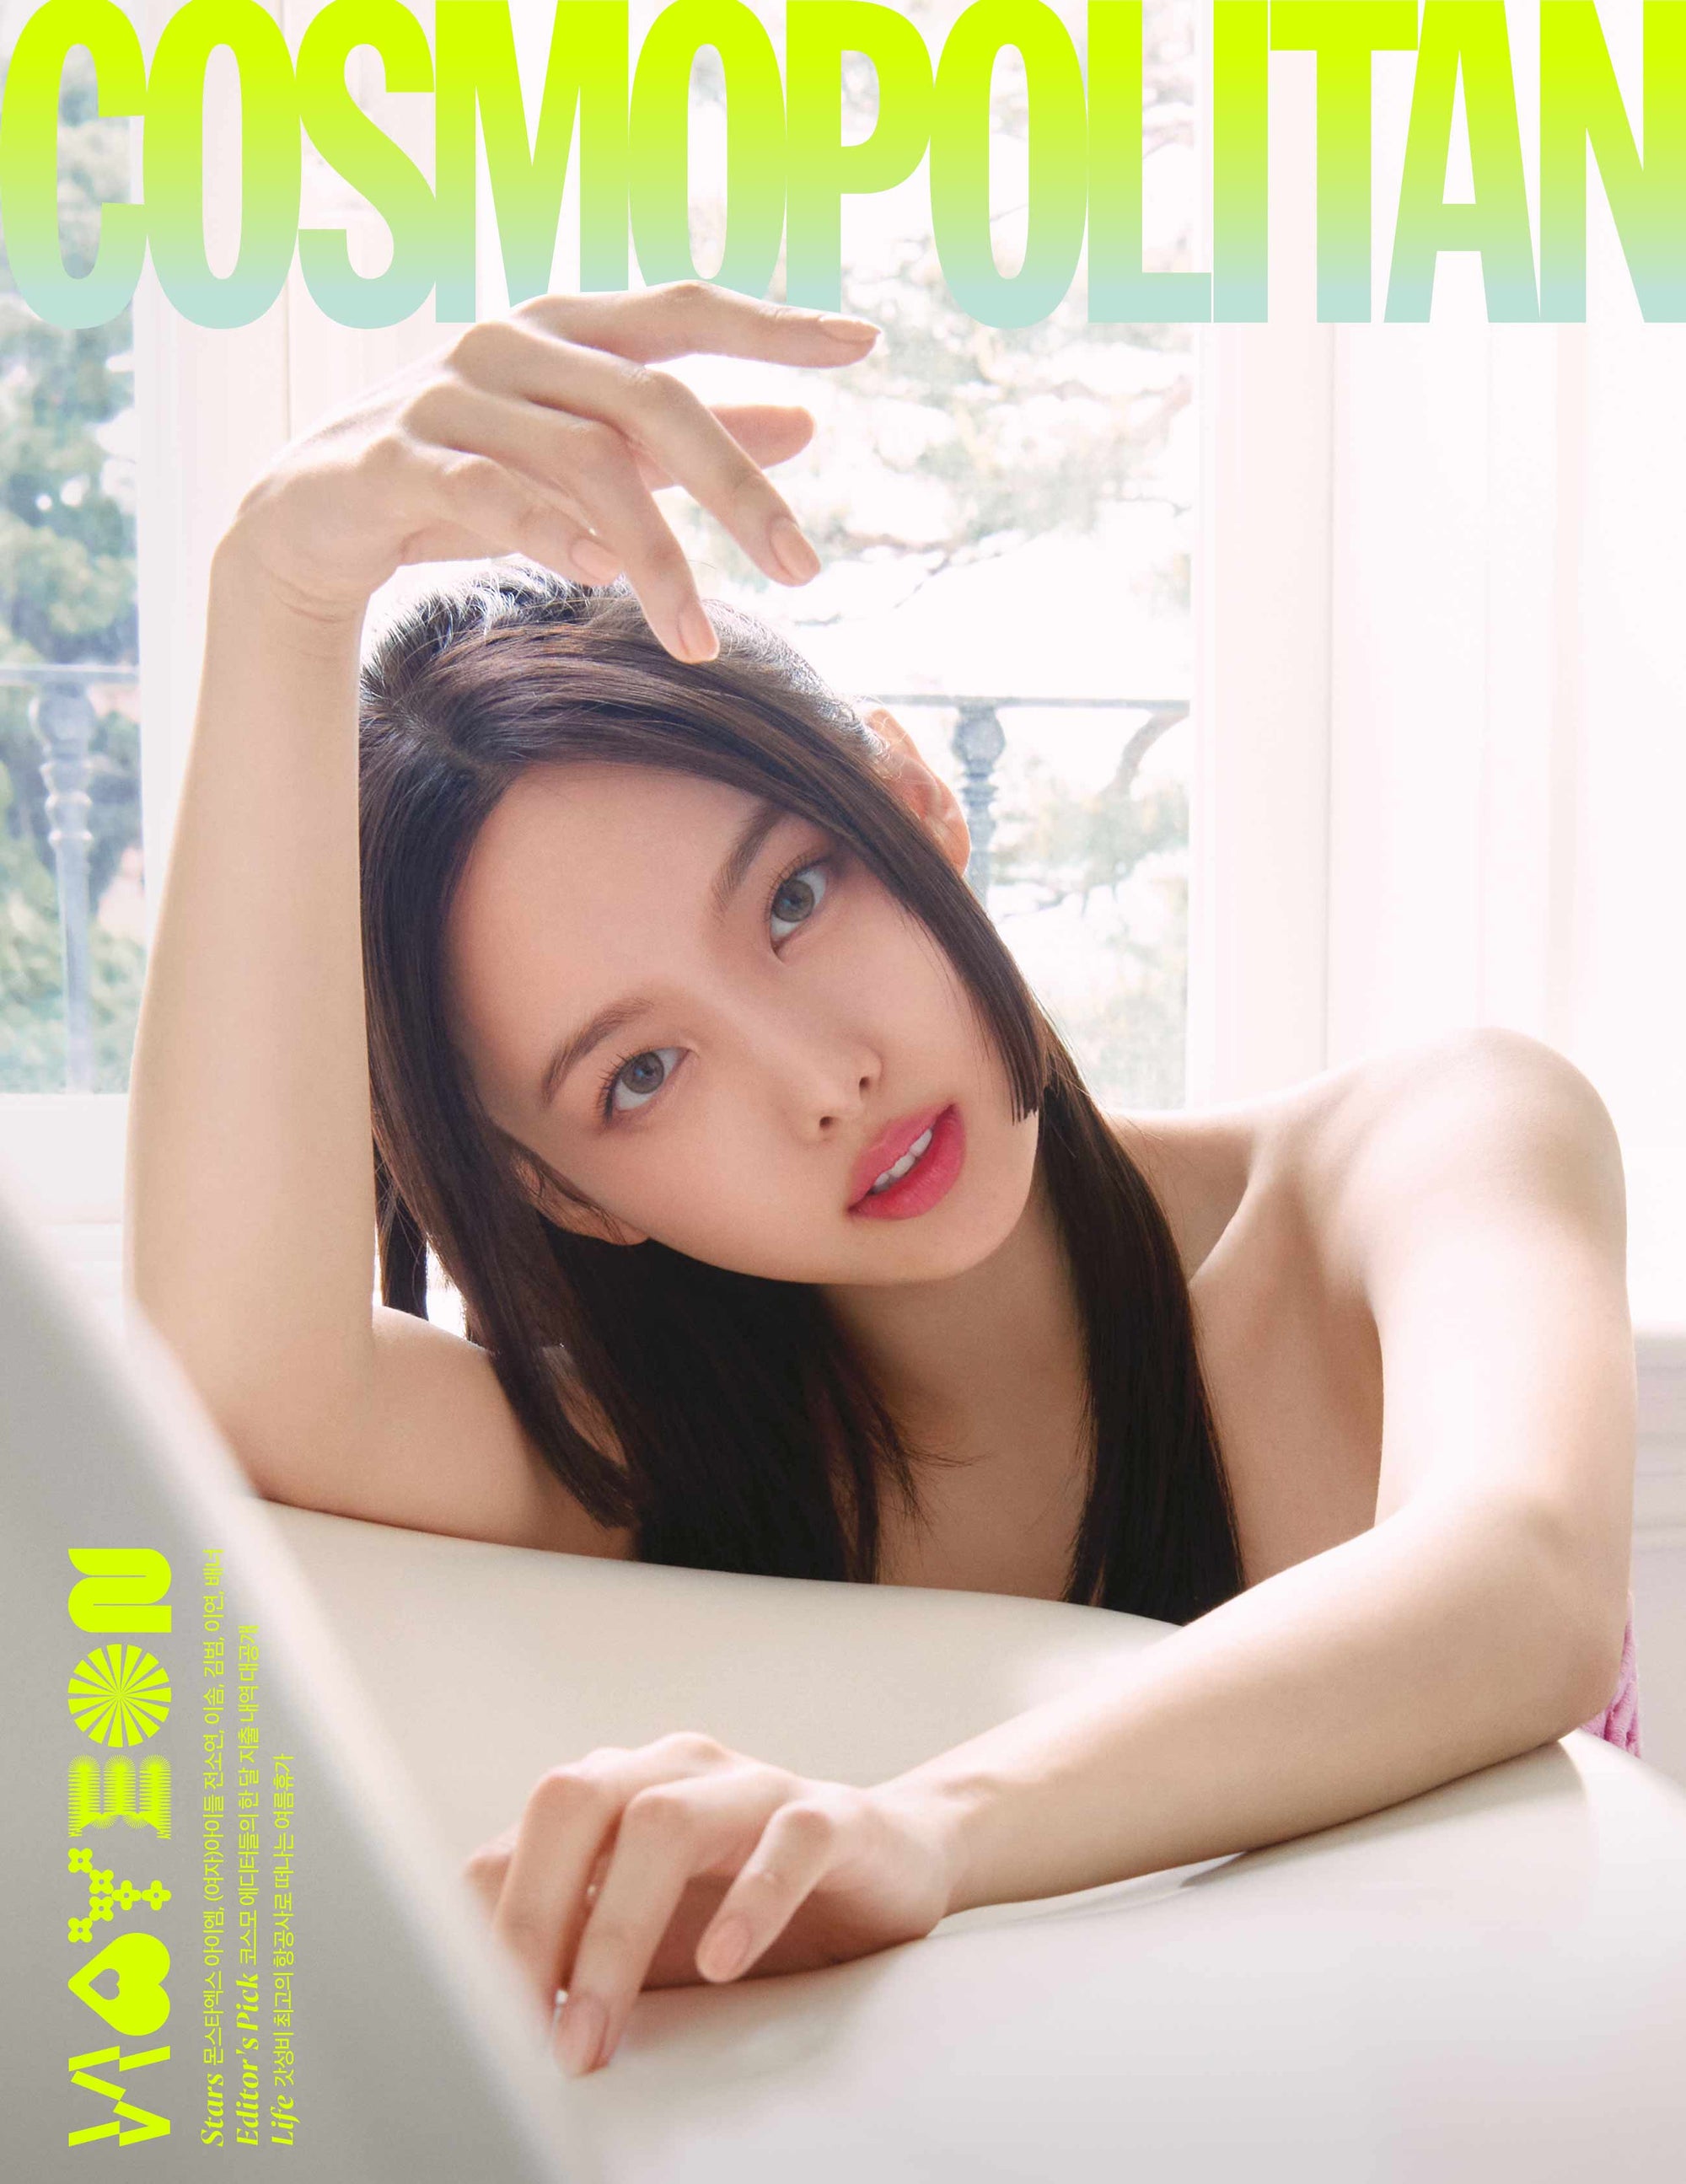 twice nayeon cover cosmopolitan magazine june